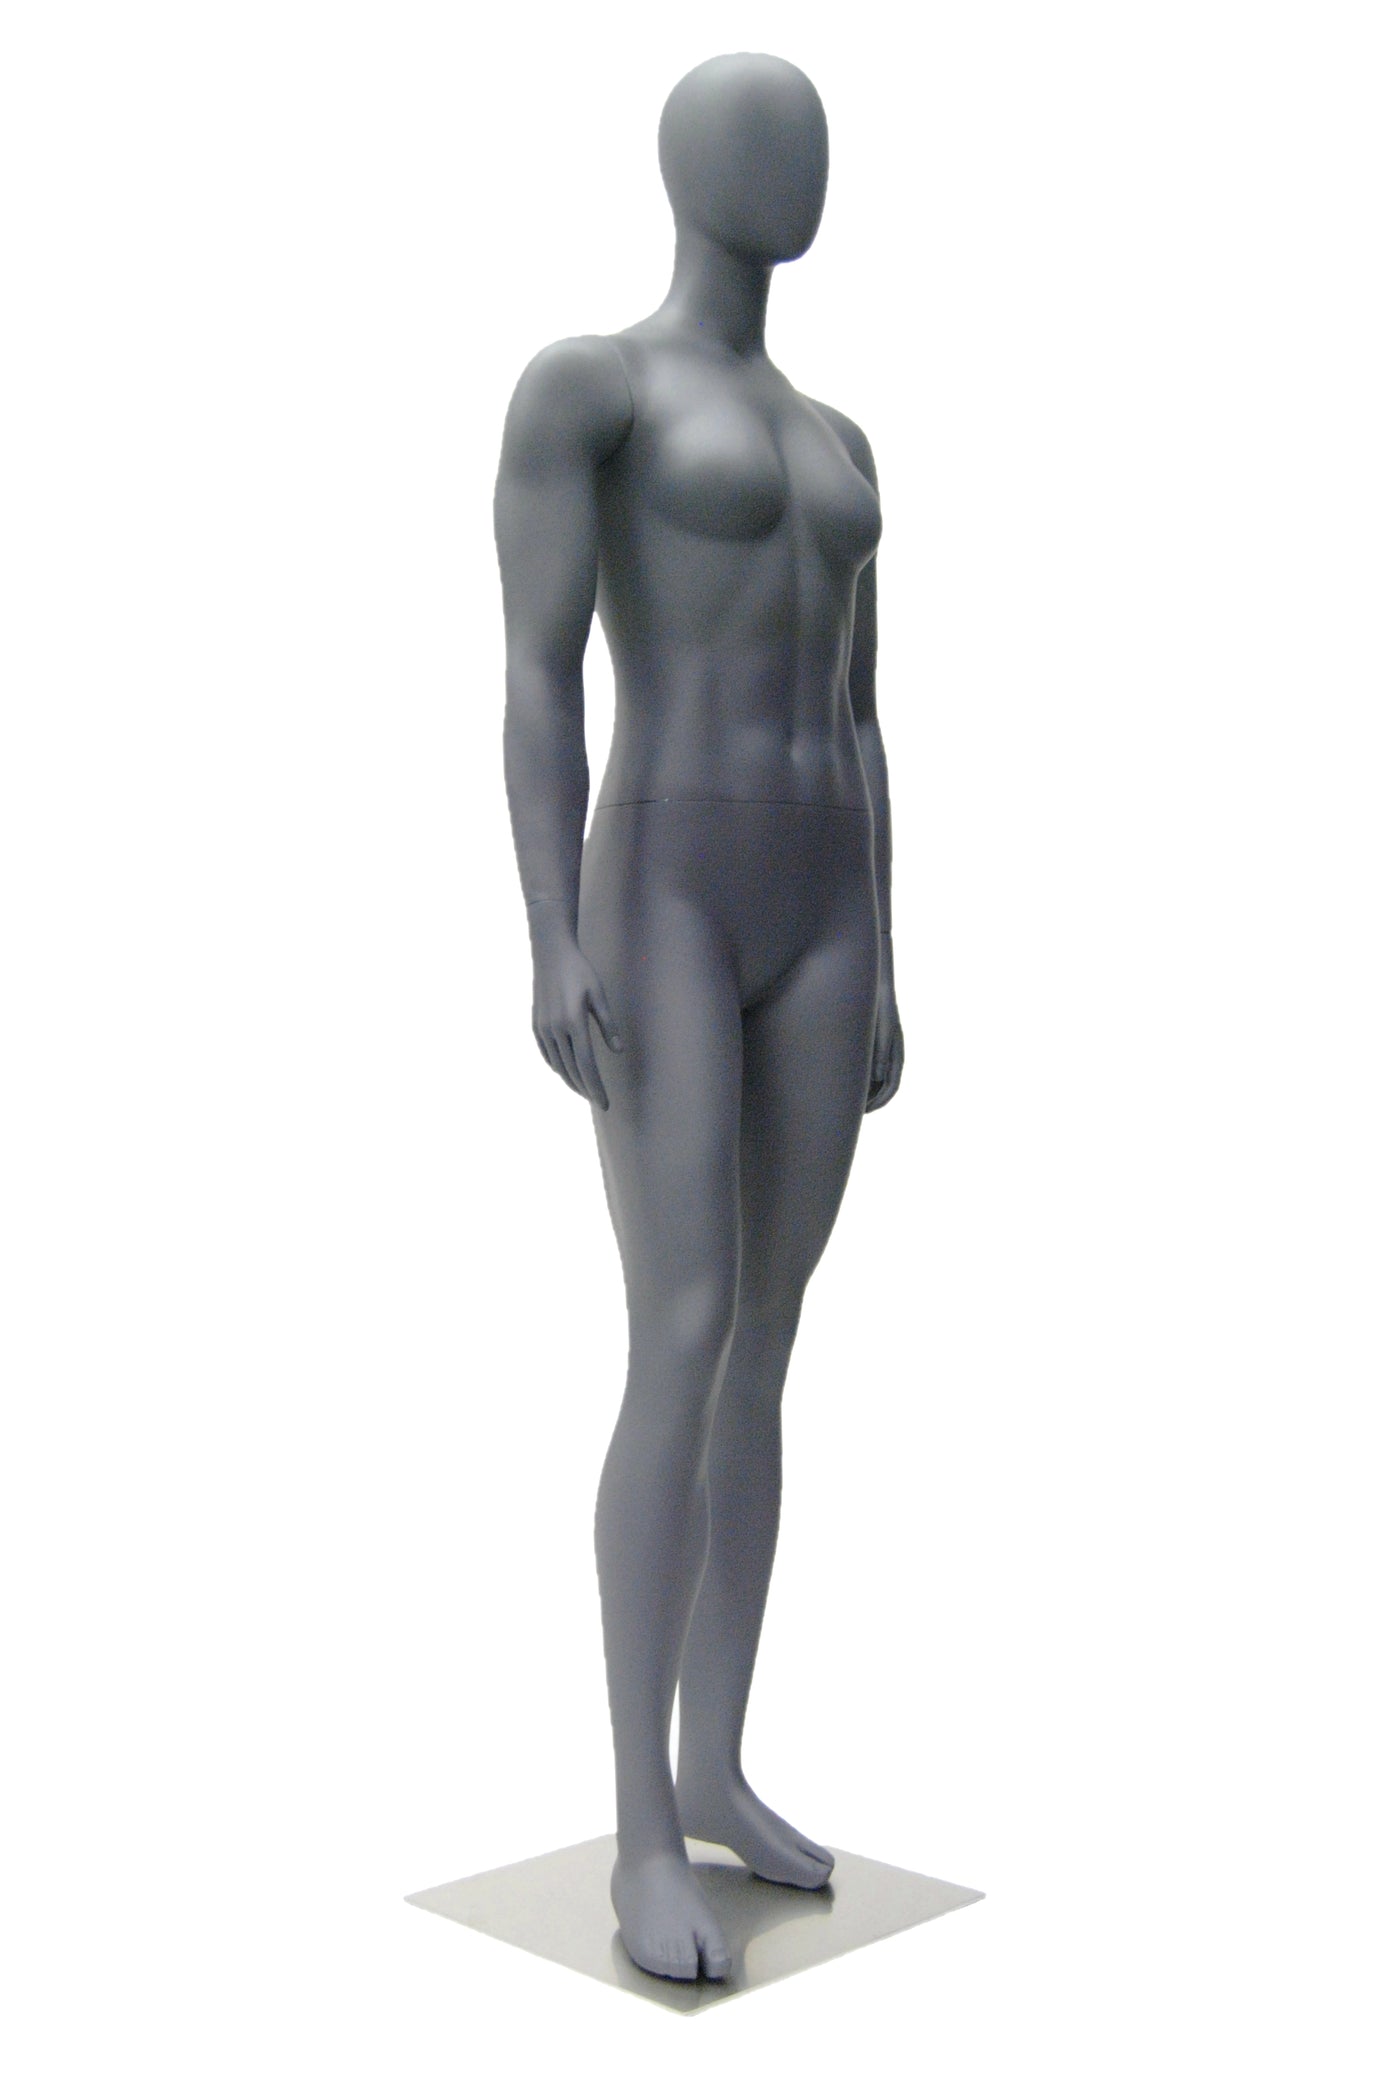 Egghead Female Mannequin in Standing Pose: Matte Grey